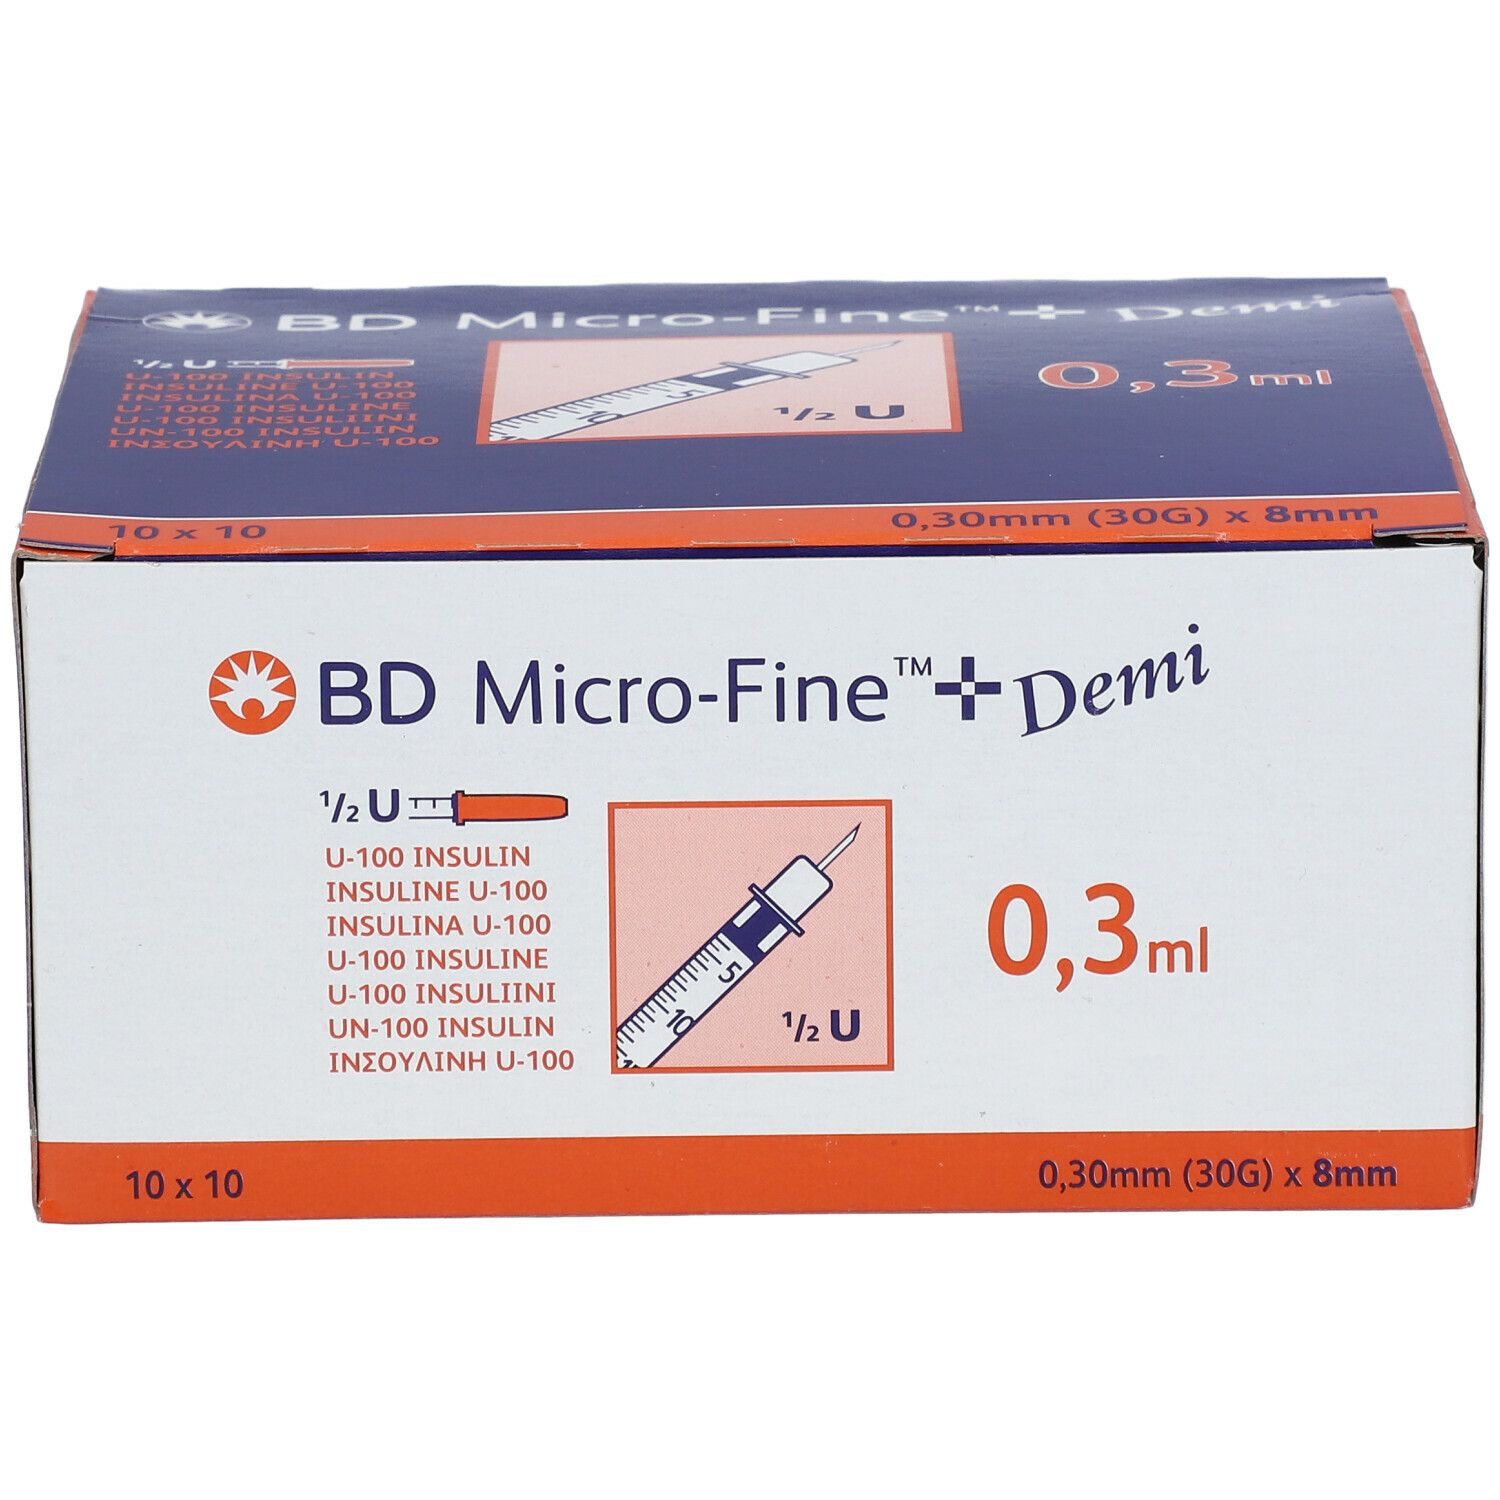 BD Micro-Fine™+ Demi Insulina Siringhe 0,3 ml 0,30 mm (30 g) x 8 mm